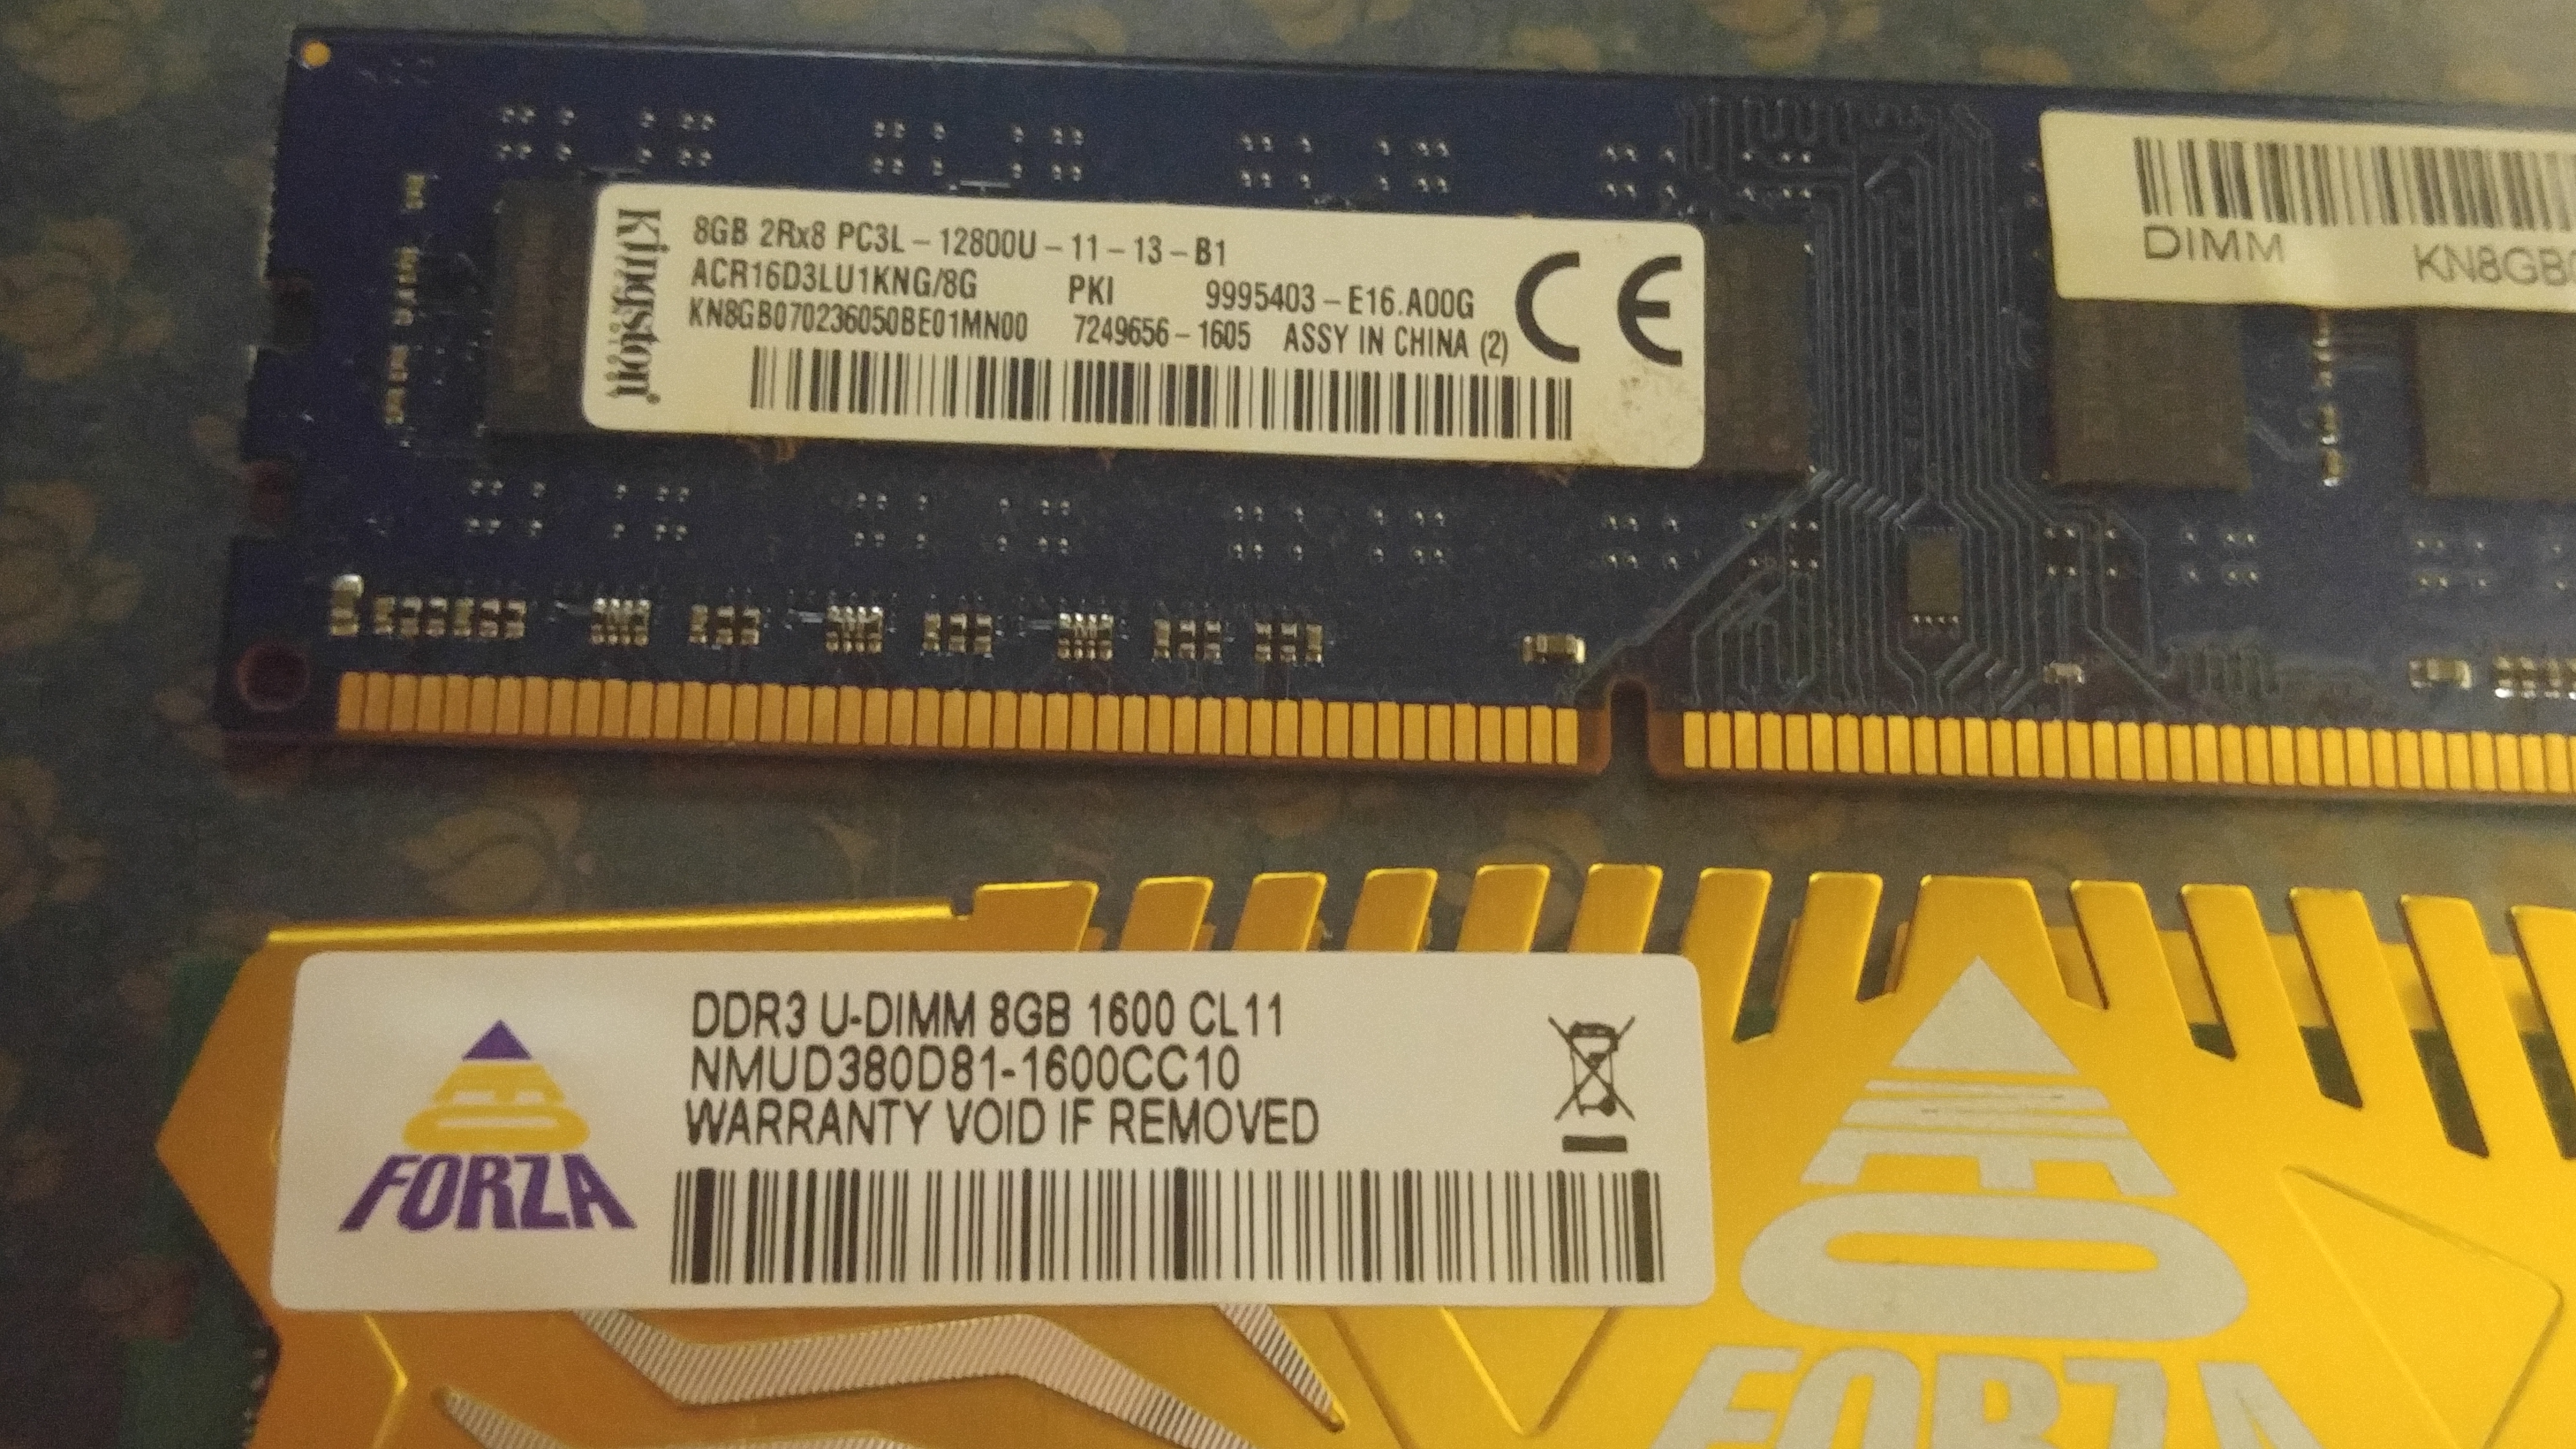 OFFTEK 2GB Replacement RAM Memory for Gateway DX4885-UR1C DDR3-12800 - Non-ECC Desktop Memory 